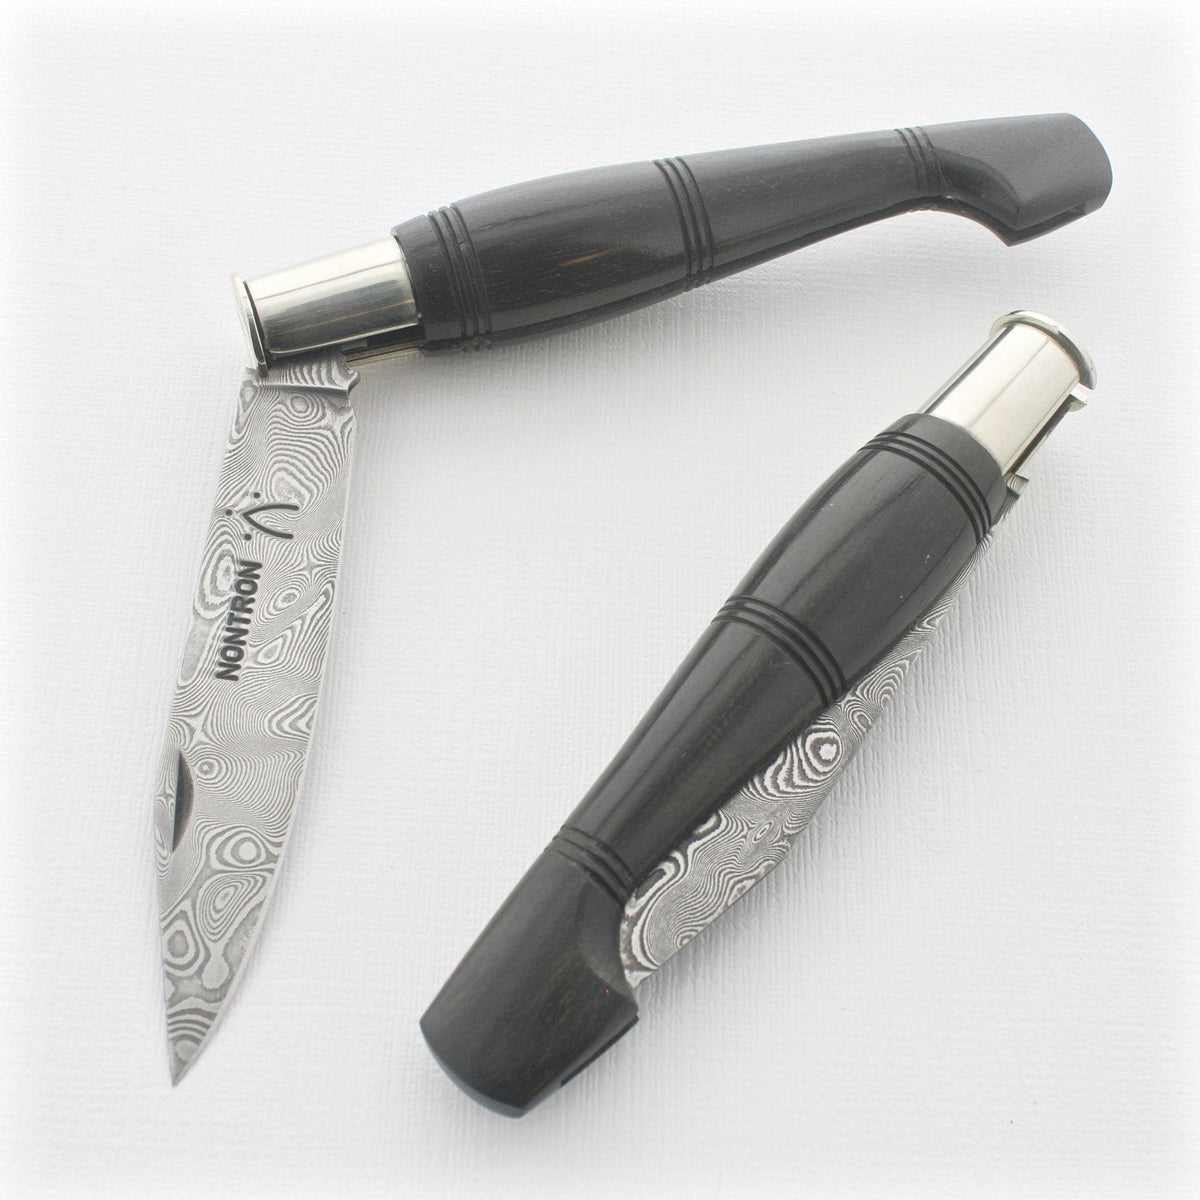 Nontron Pocket Knife No25 - Damascus Blade Clog Handle